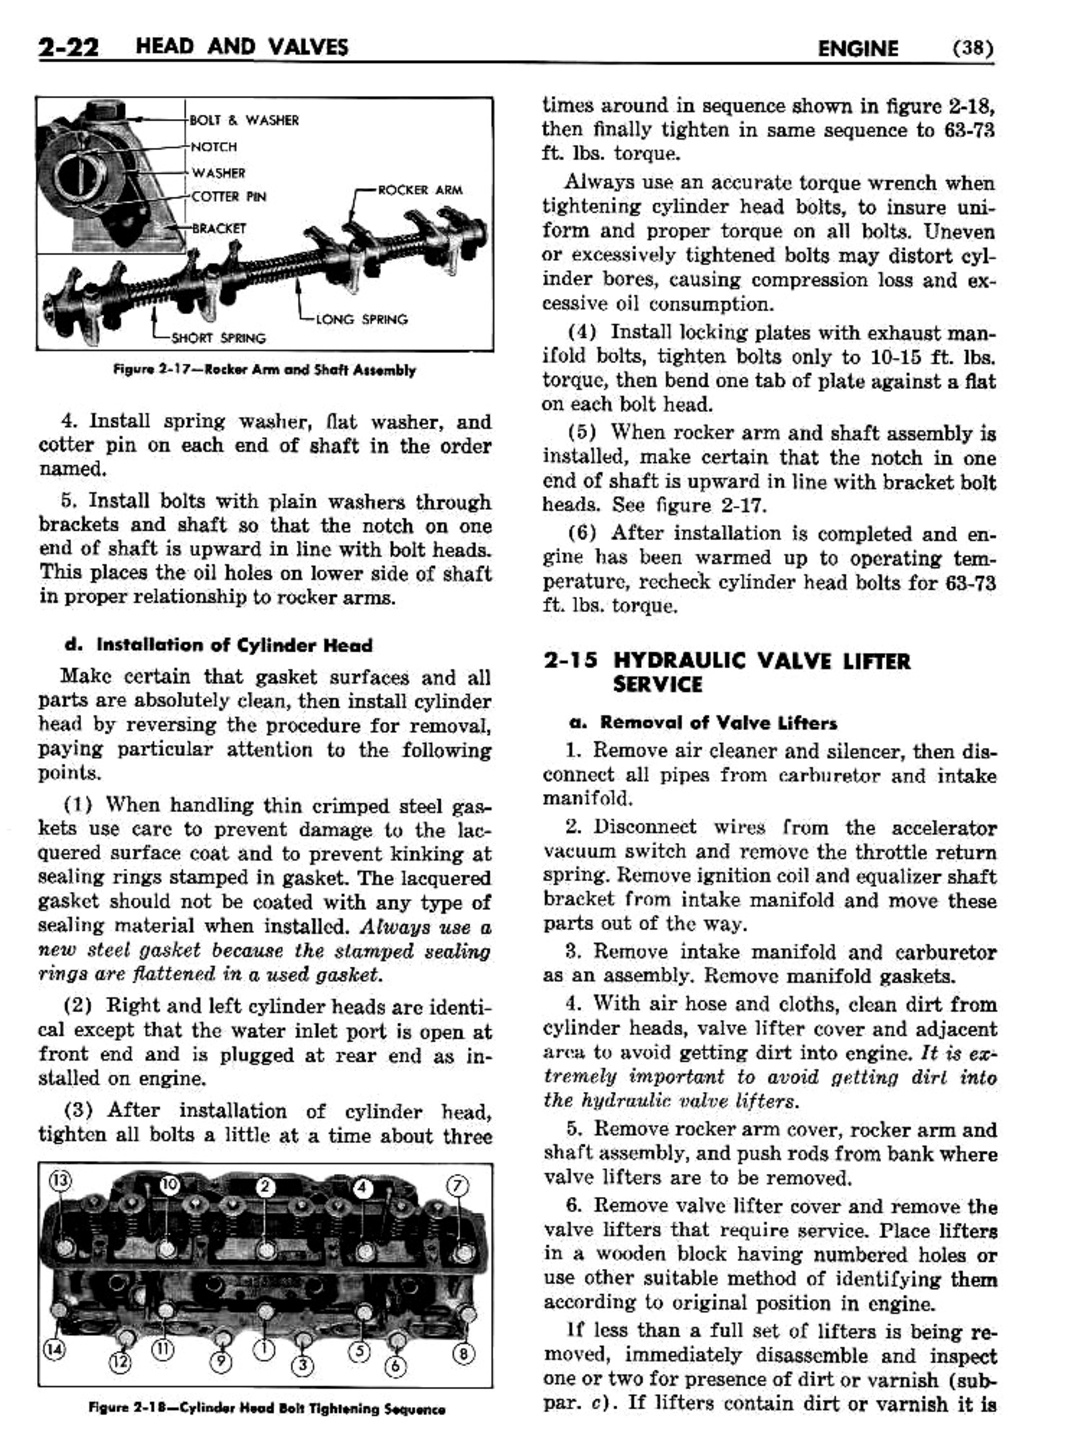 n_03 1956 Buick Shop Manual - Engine-022-022.jpg